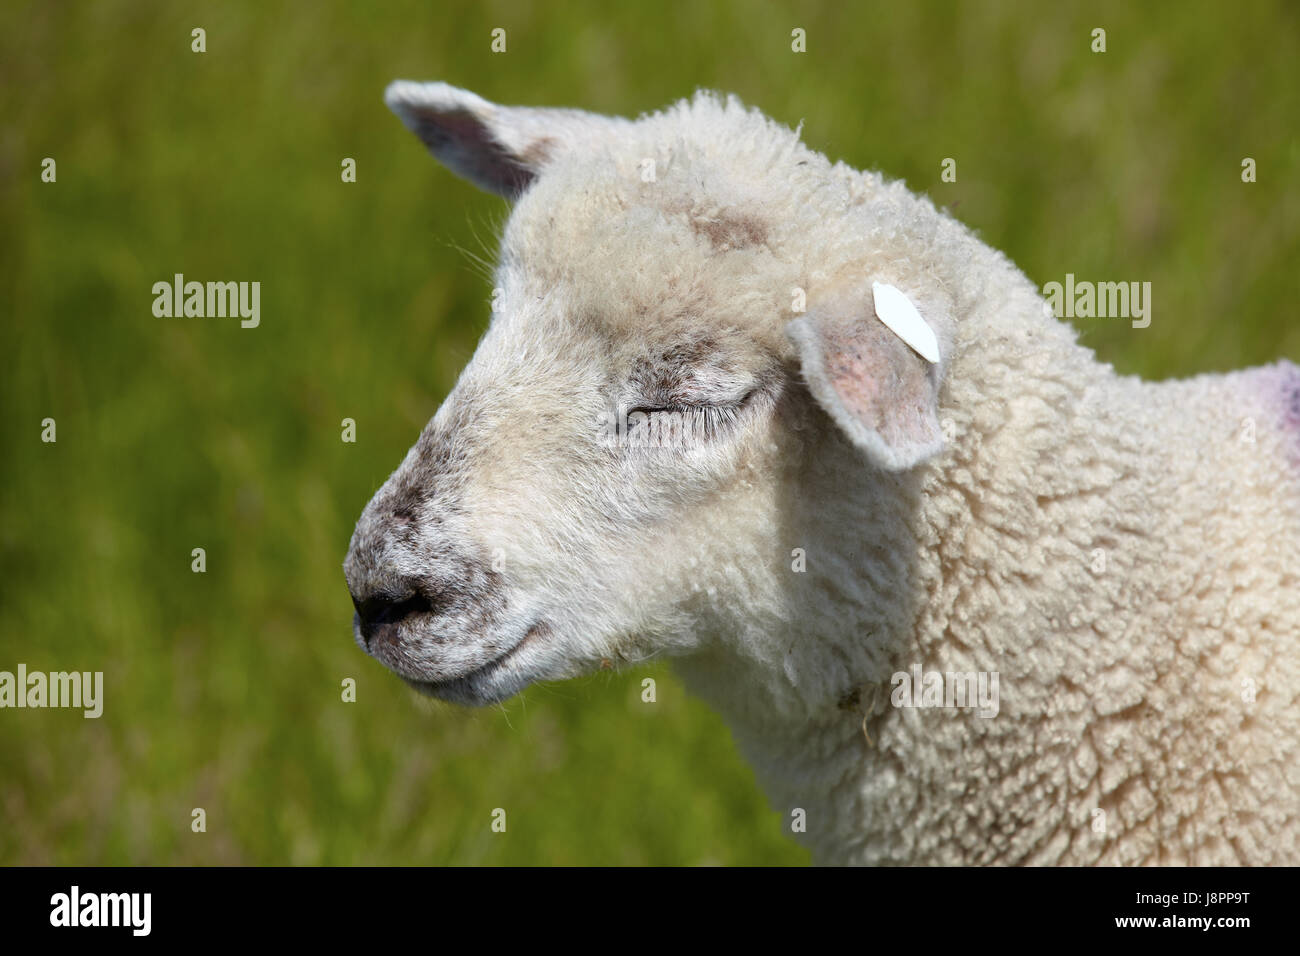 profile, green, portrait, sheep, wool, meadow, grass, lawn, lamb, head, house, Stock Photo